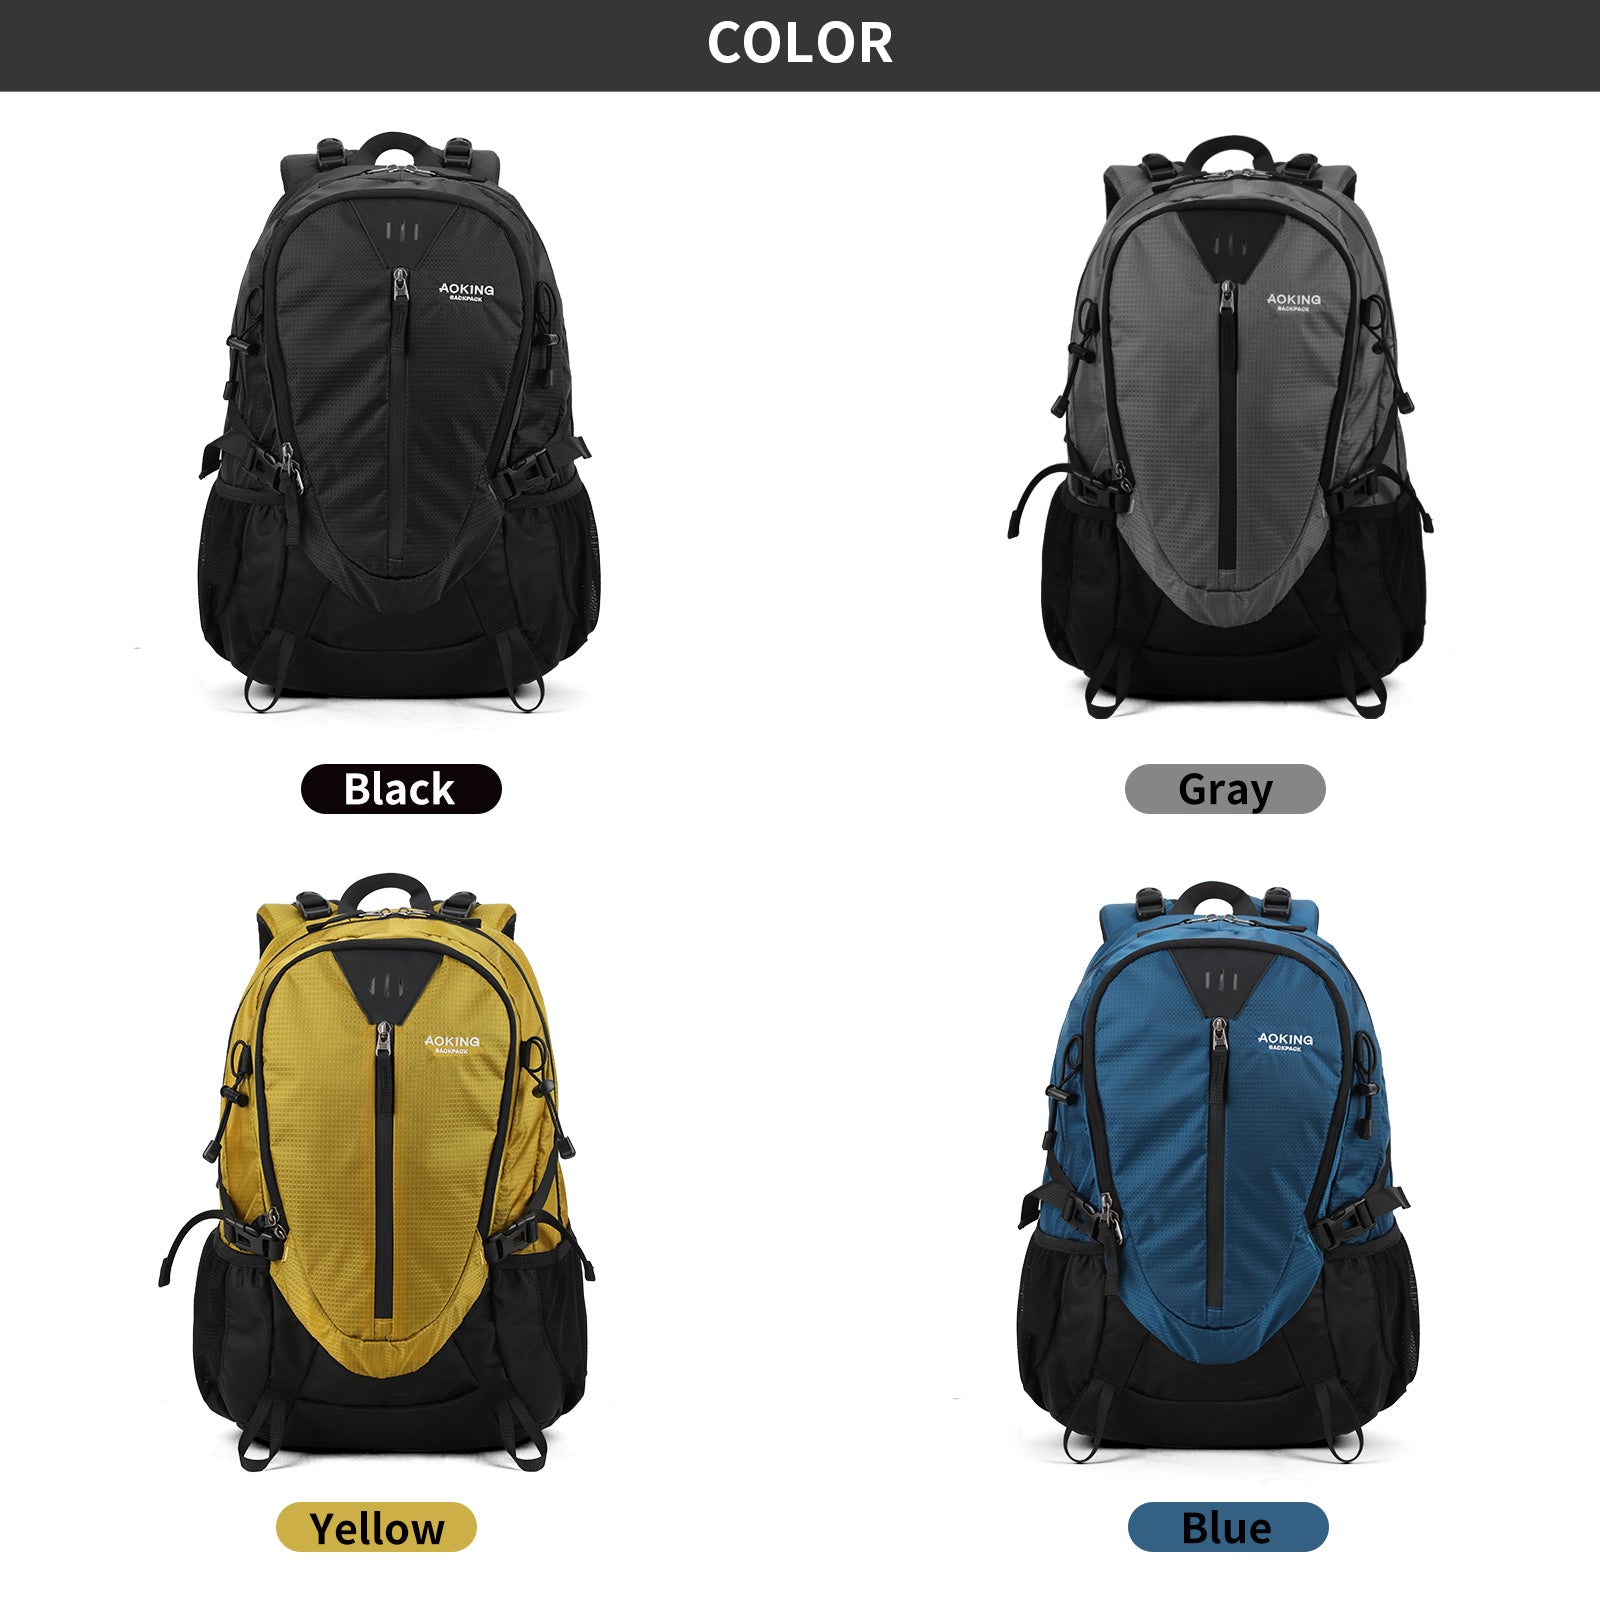 Aoking Backpack Large Capacity Casual Backpack Outdoor Bag JN79878